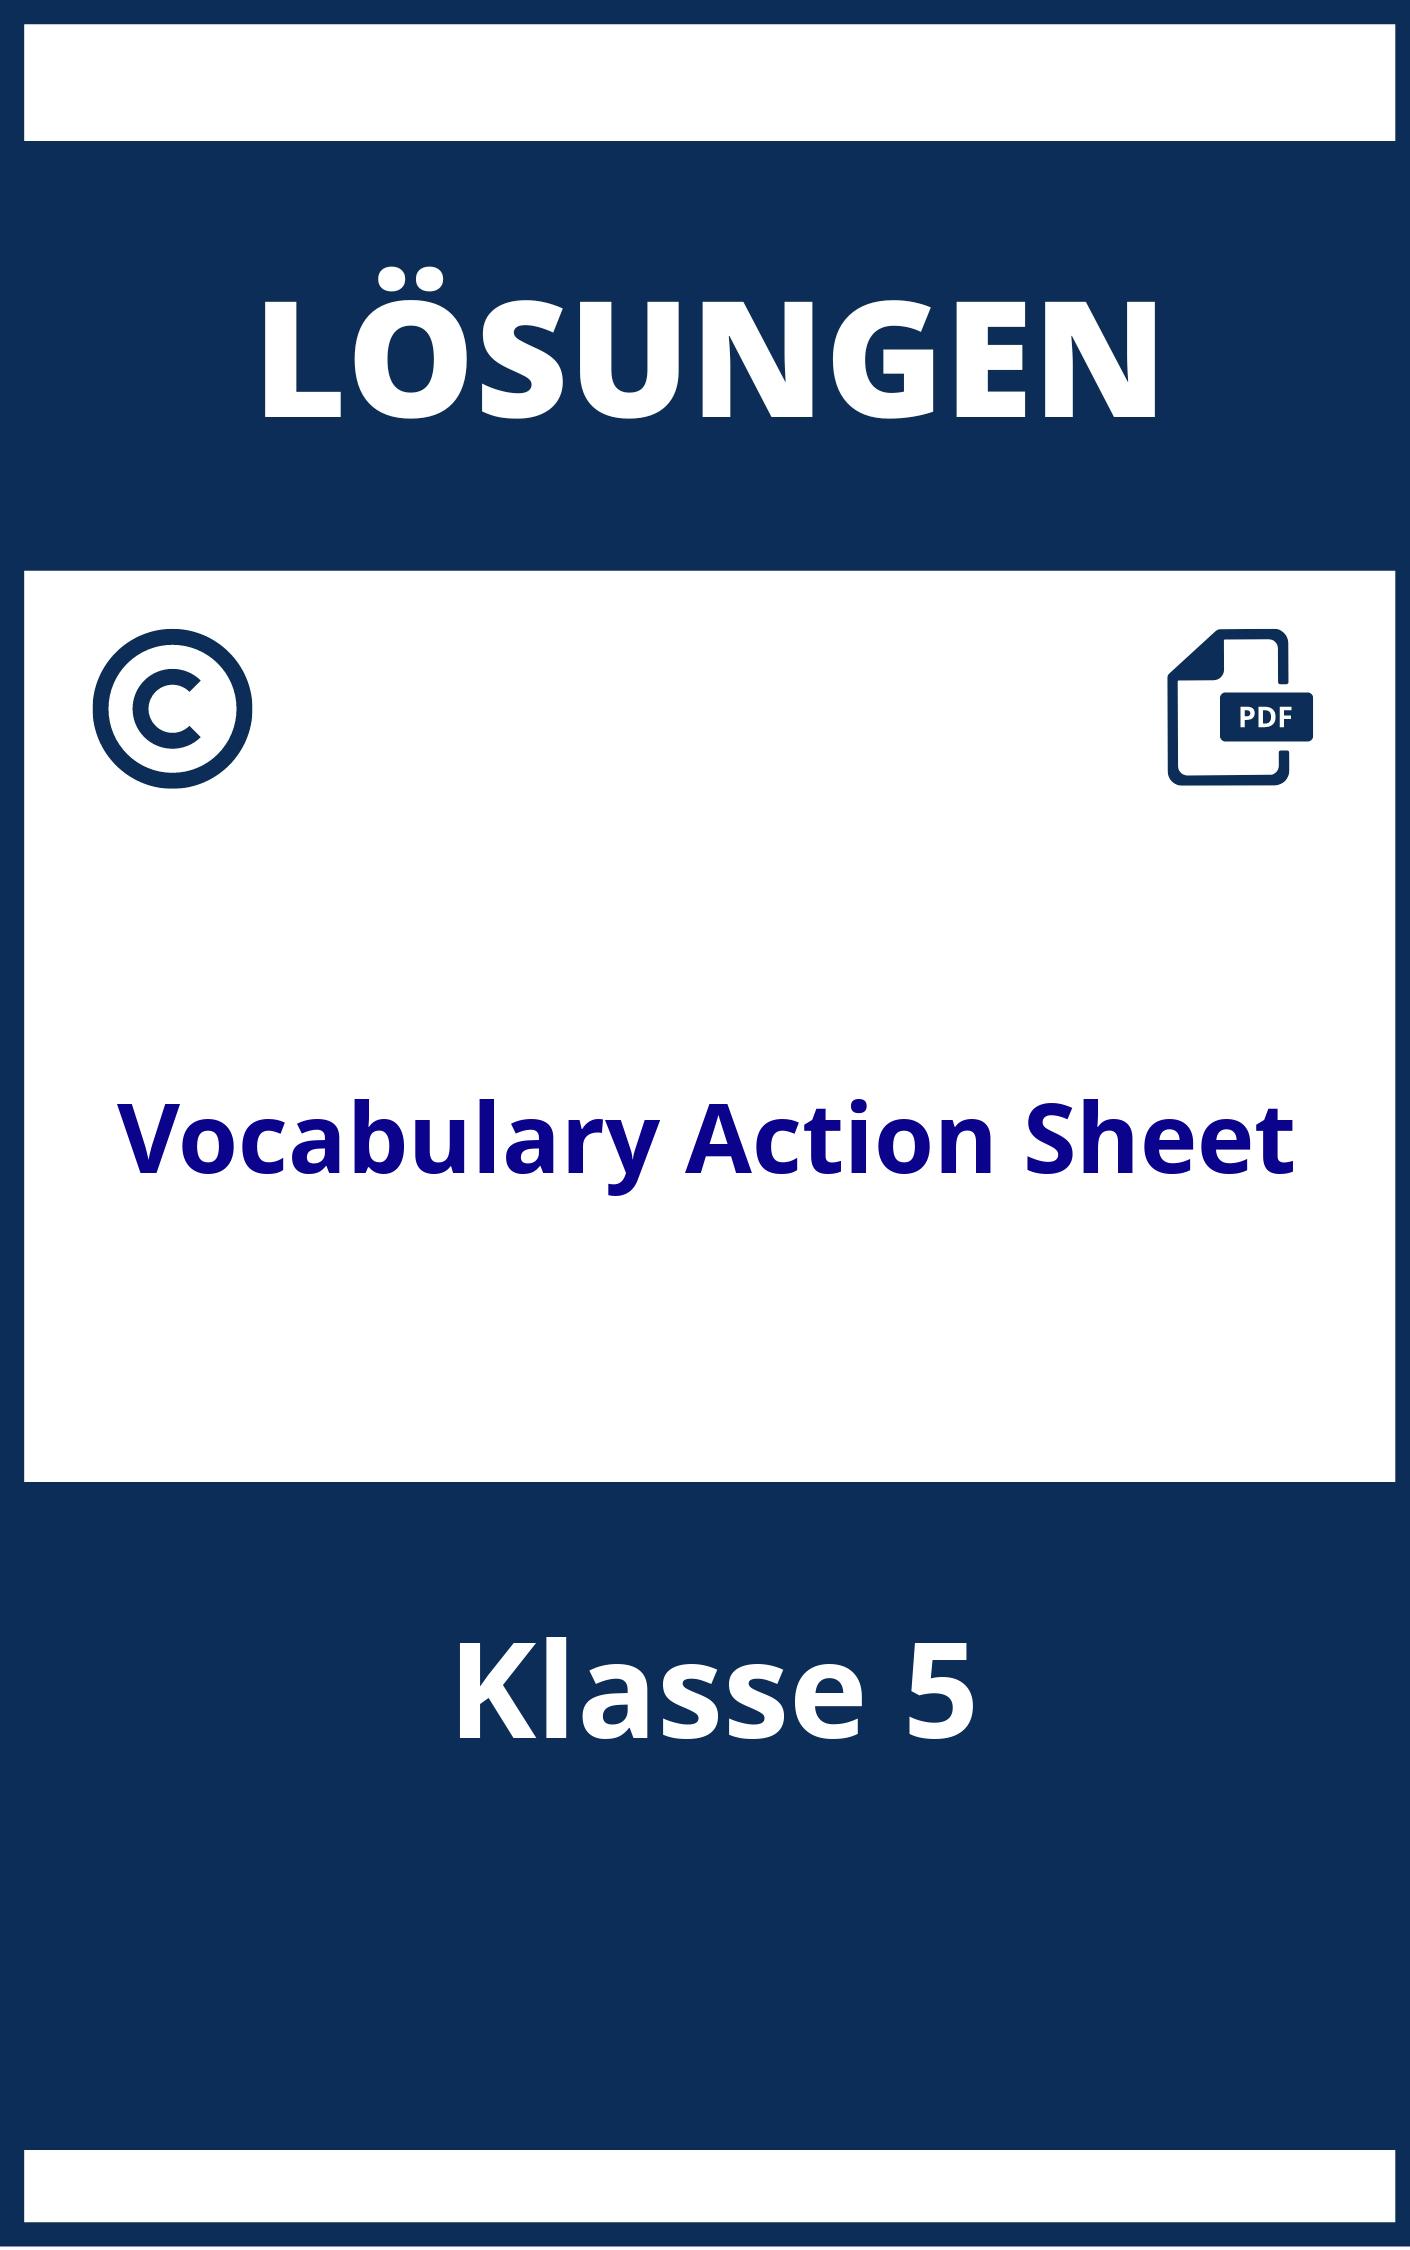 Vocabulary Action Sheet Lösungen Klasse 5